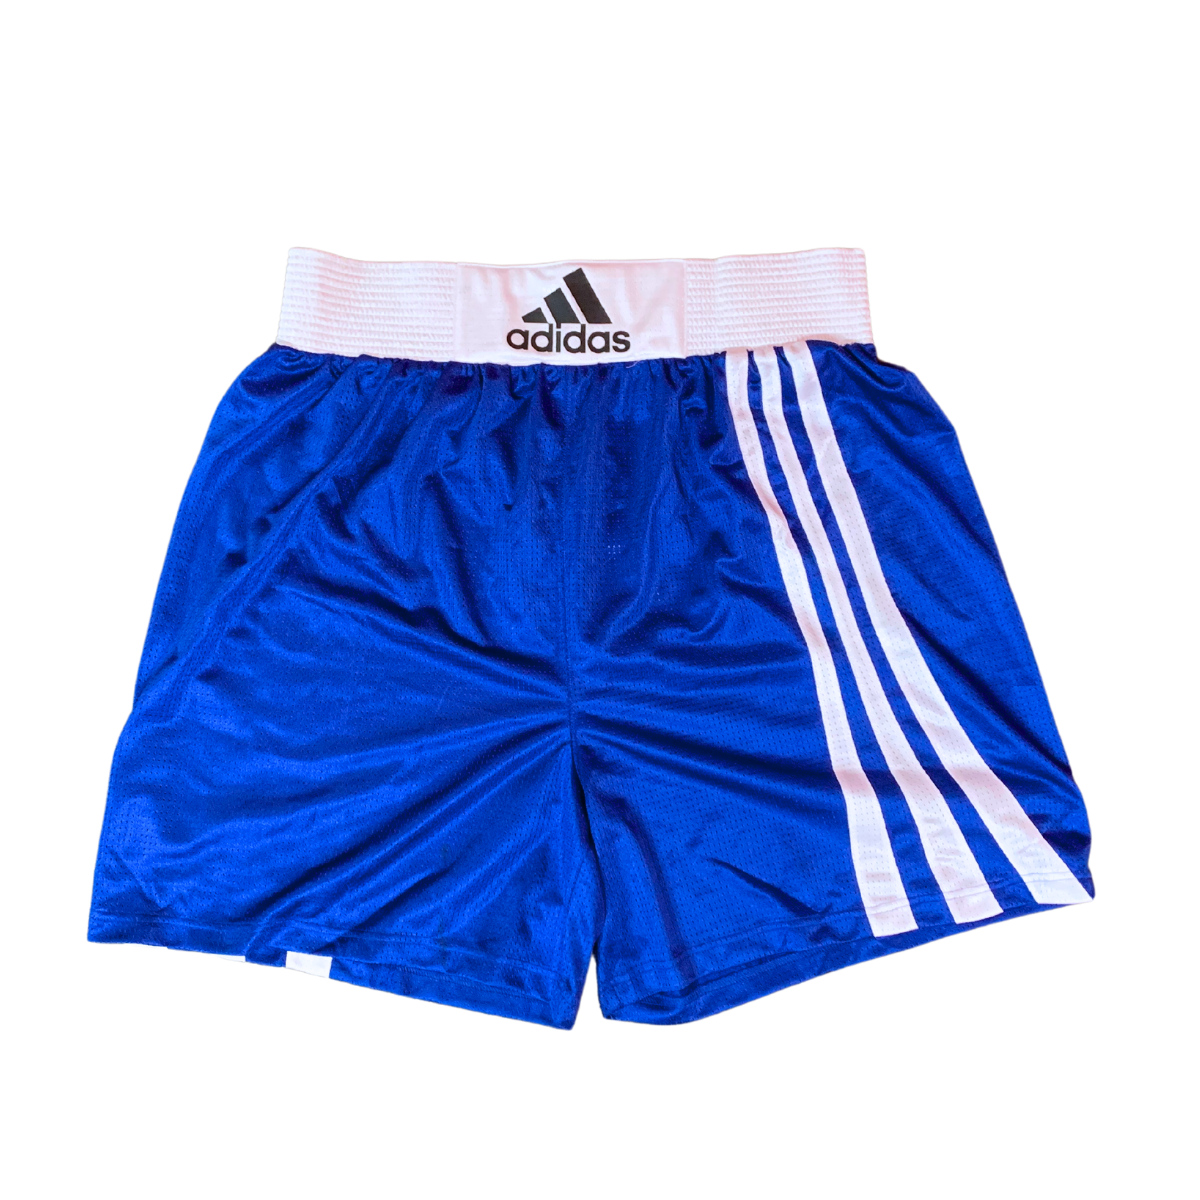 Adidas Boxing Shorts - Competition-Clothing-Adidas®-XXL-Canada Fighting